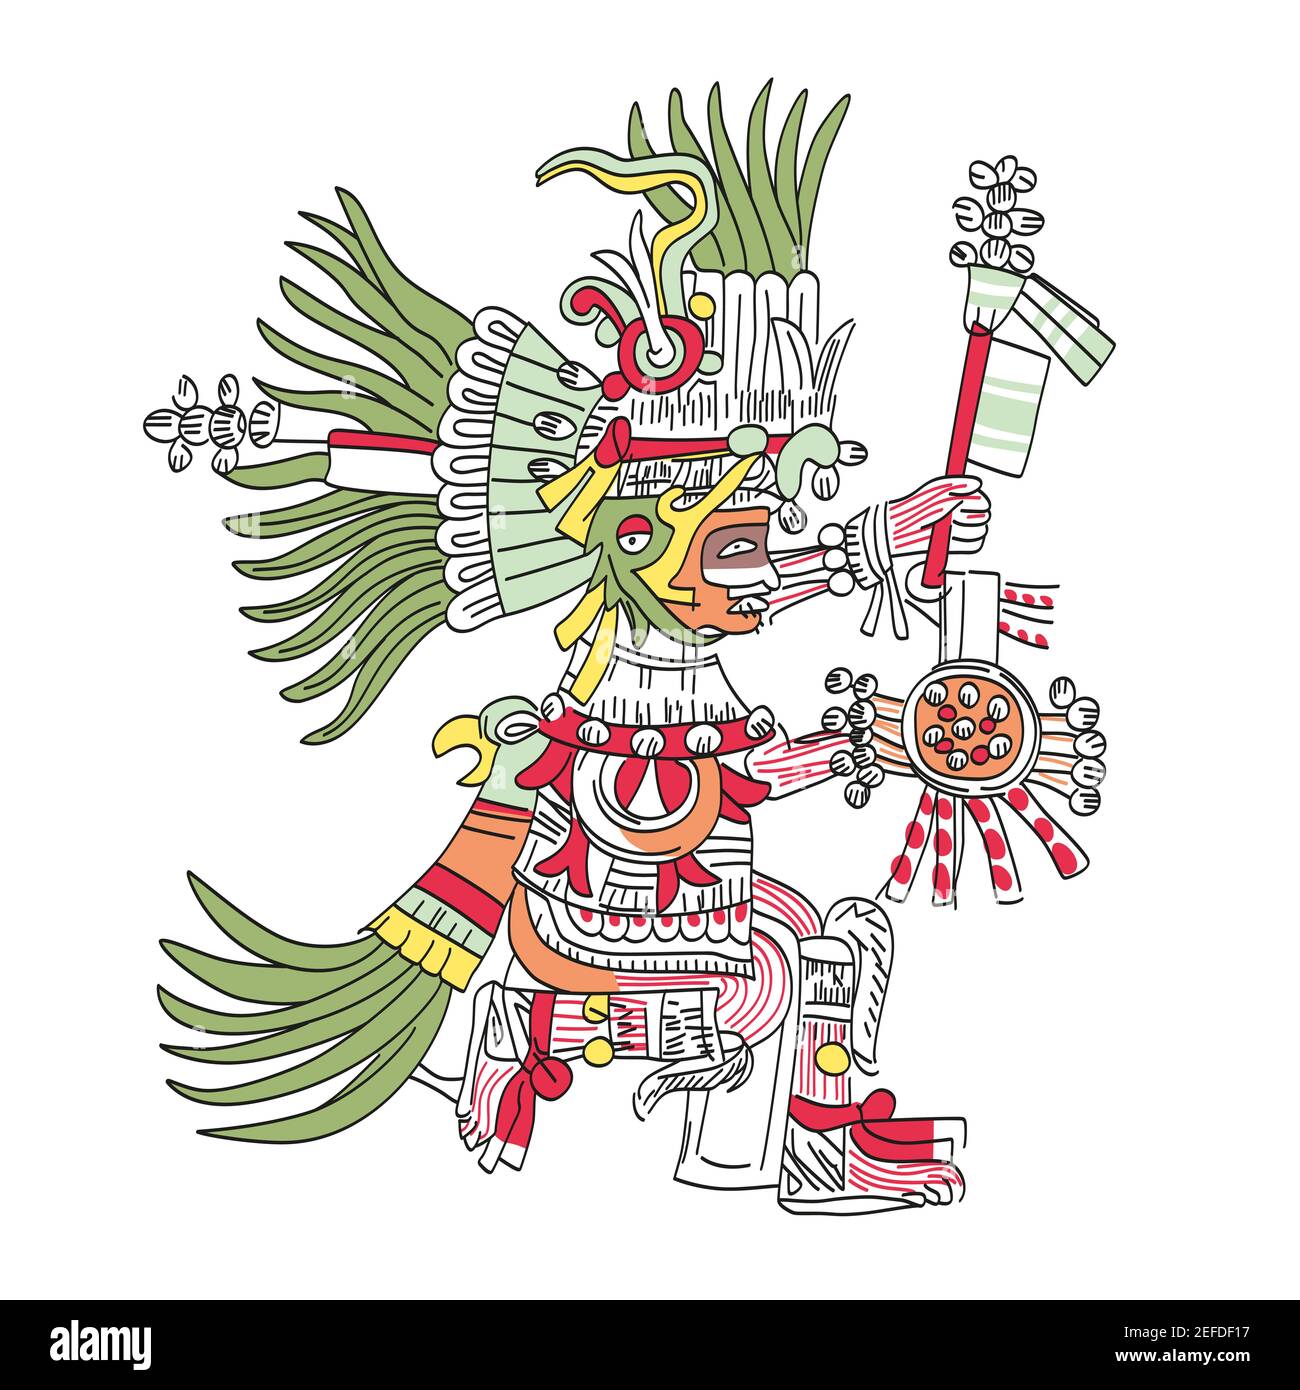 Huitzilopochtli, Aztec god, as depicted in Codex Telleriano-Remensis in 16th century. Deity of war, sun, human sacrifice, patron of Tenochtitlan. Stock Photo